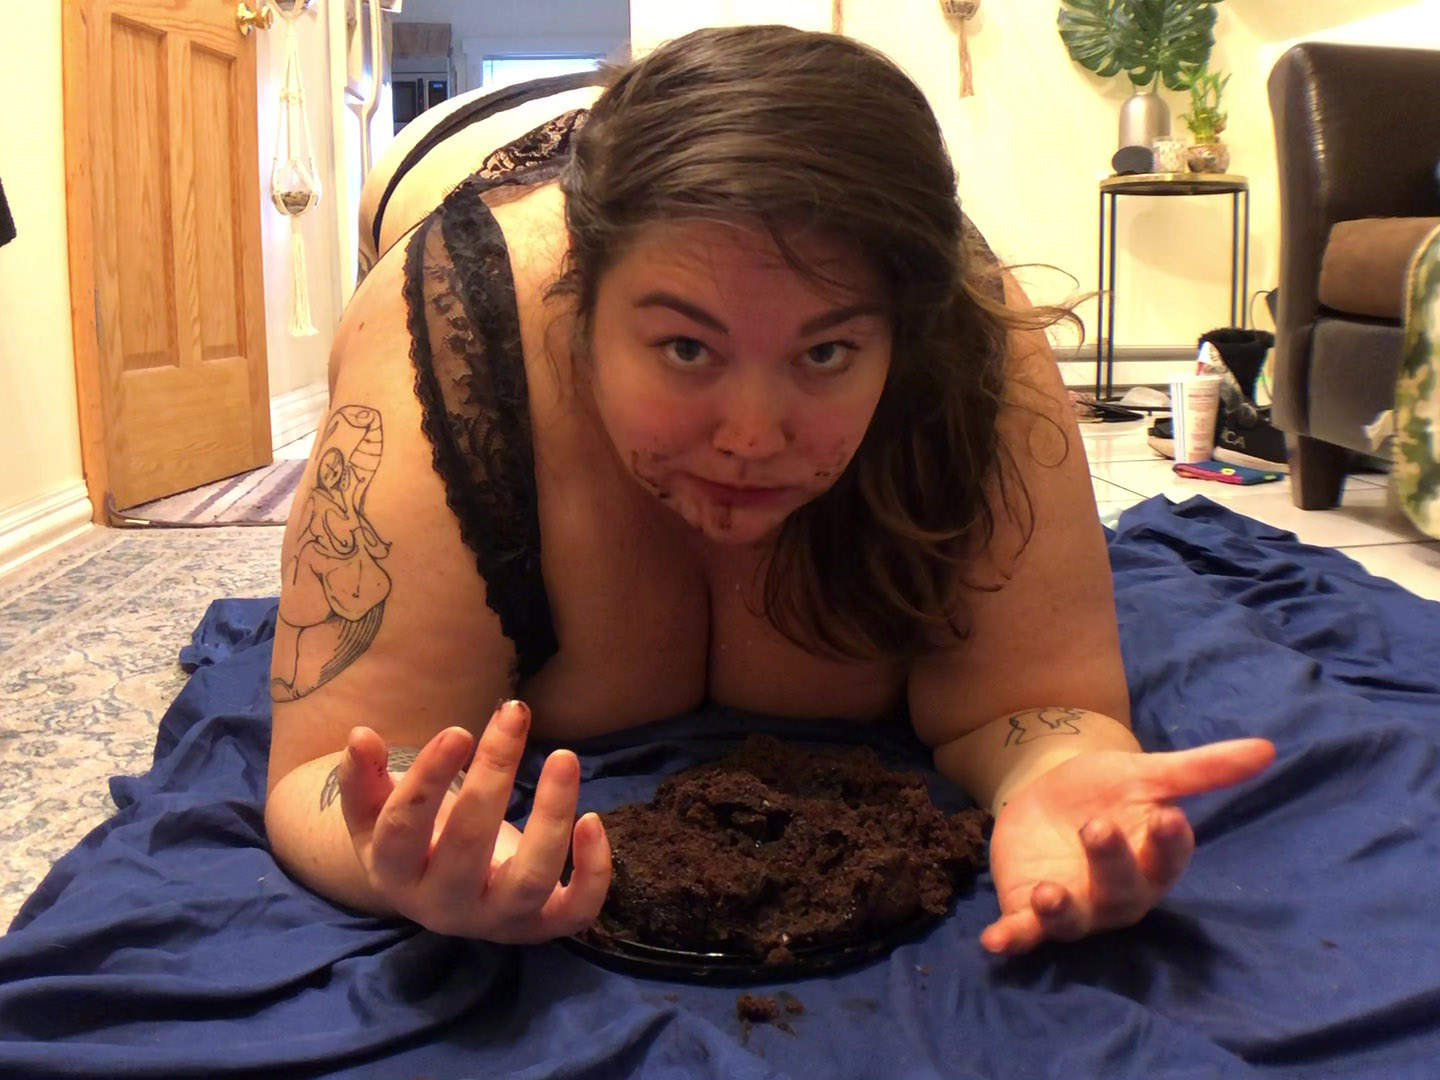 Let her eat CAKE!